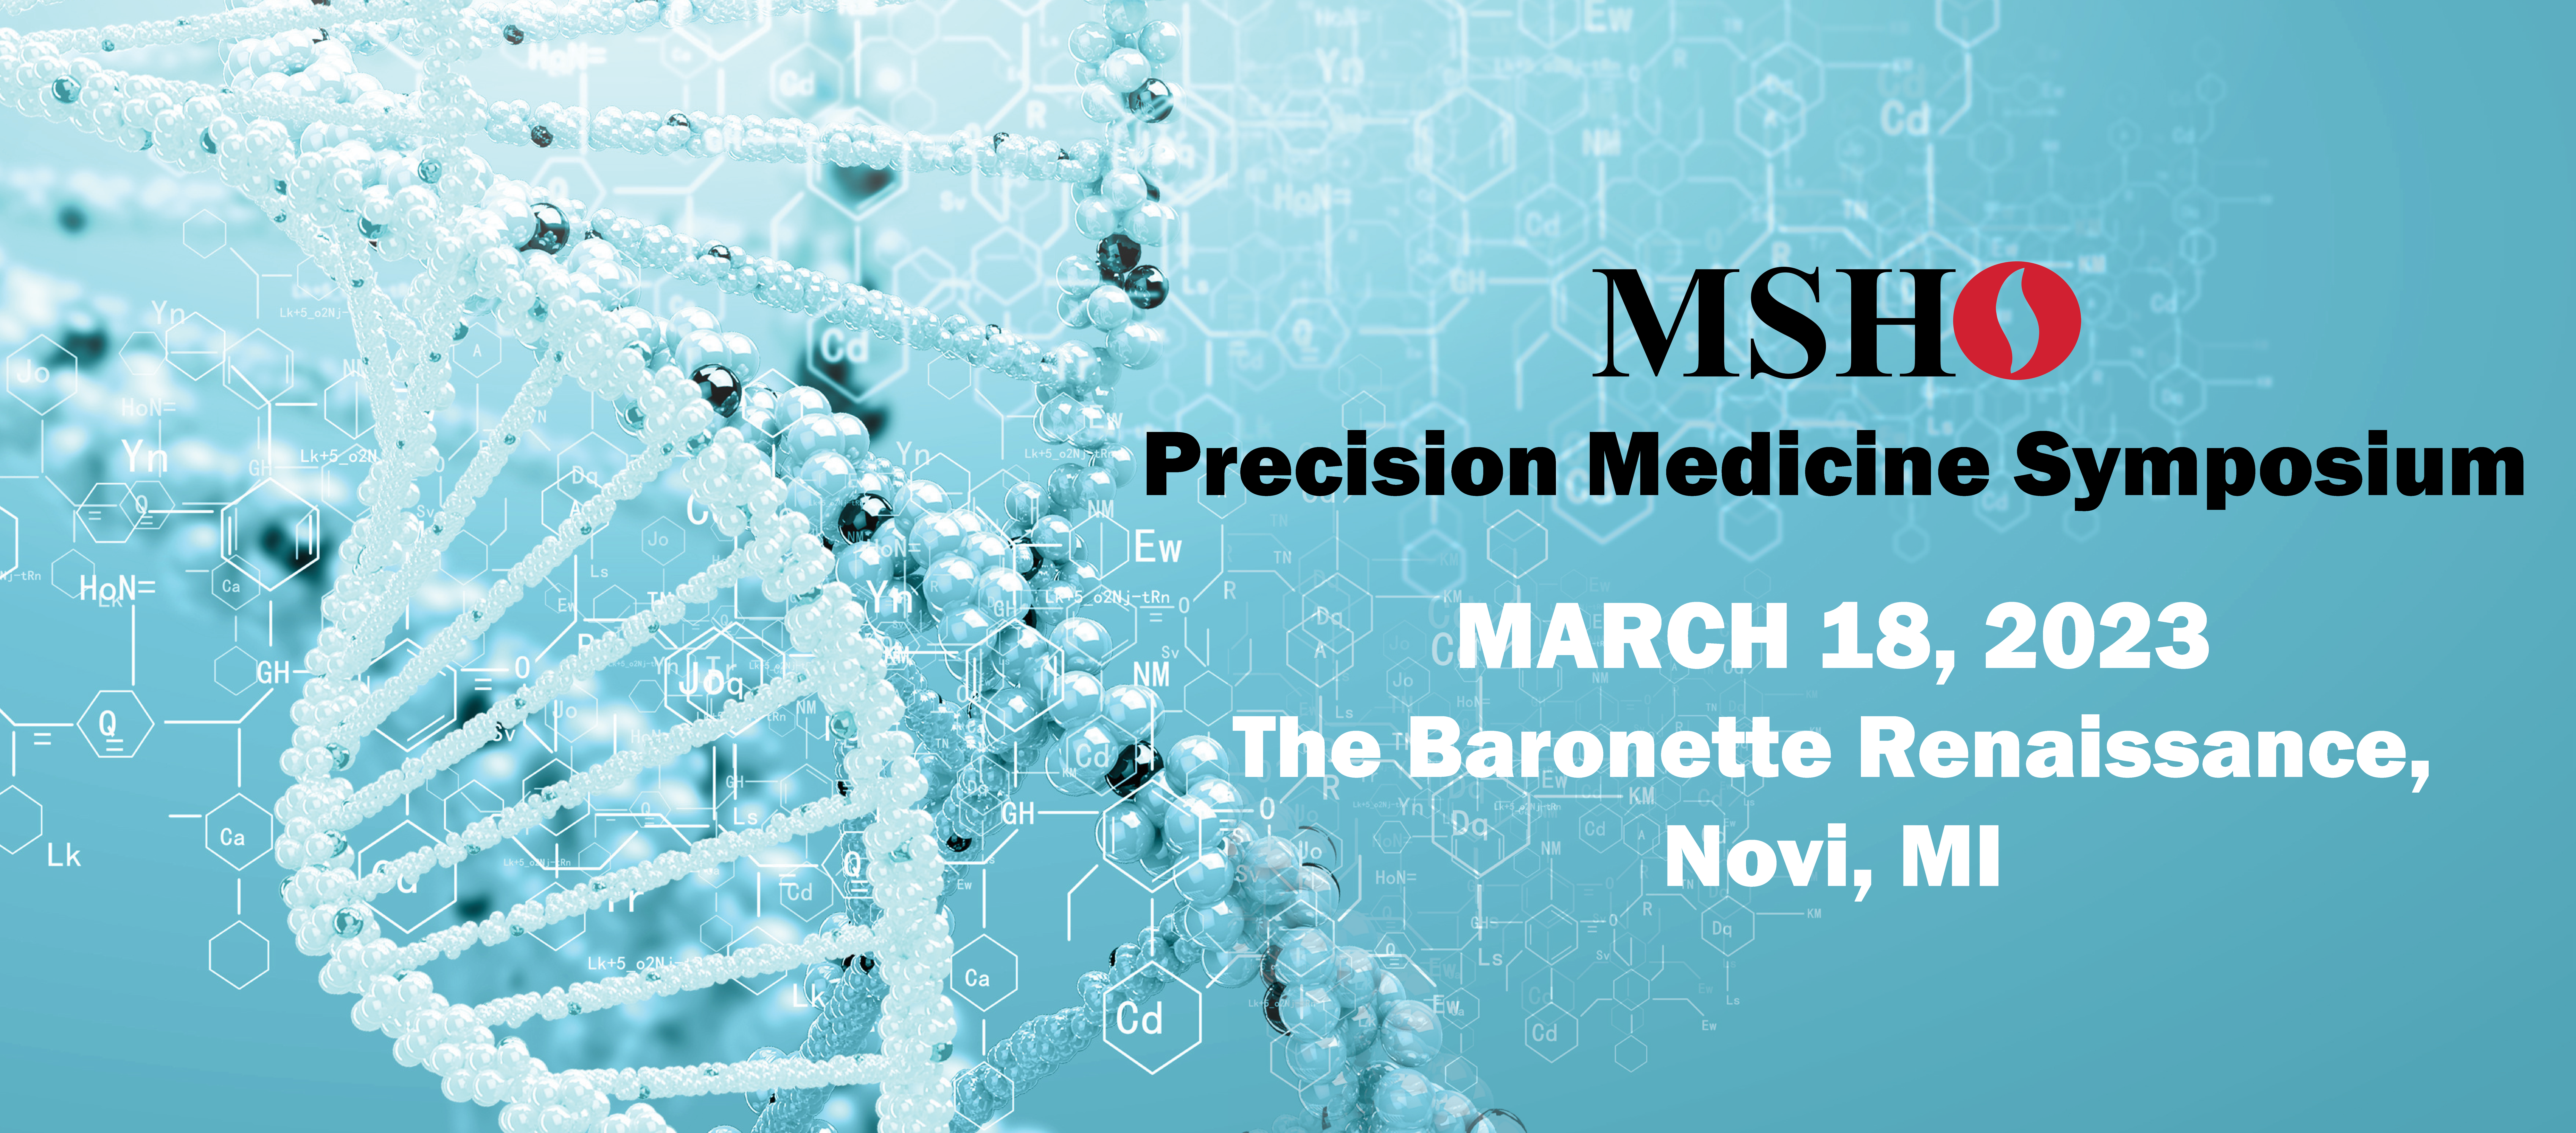 MSHO Precision Medicine Symposium